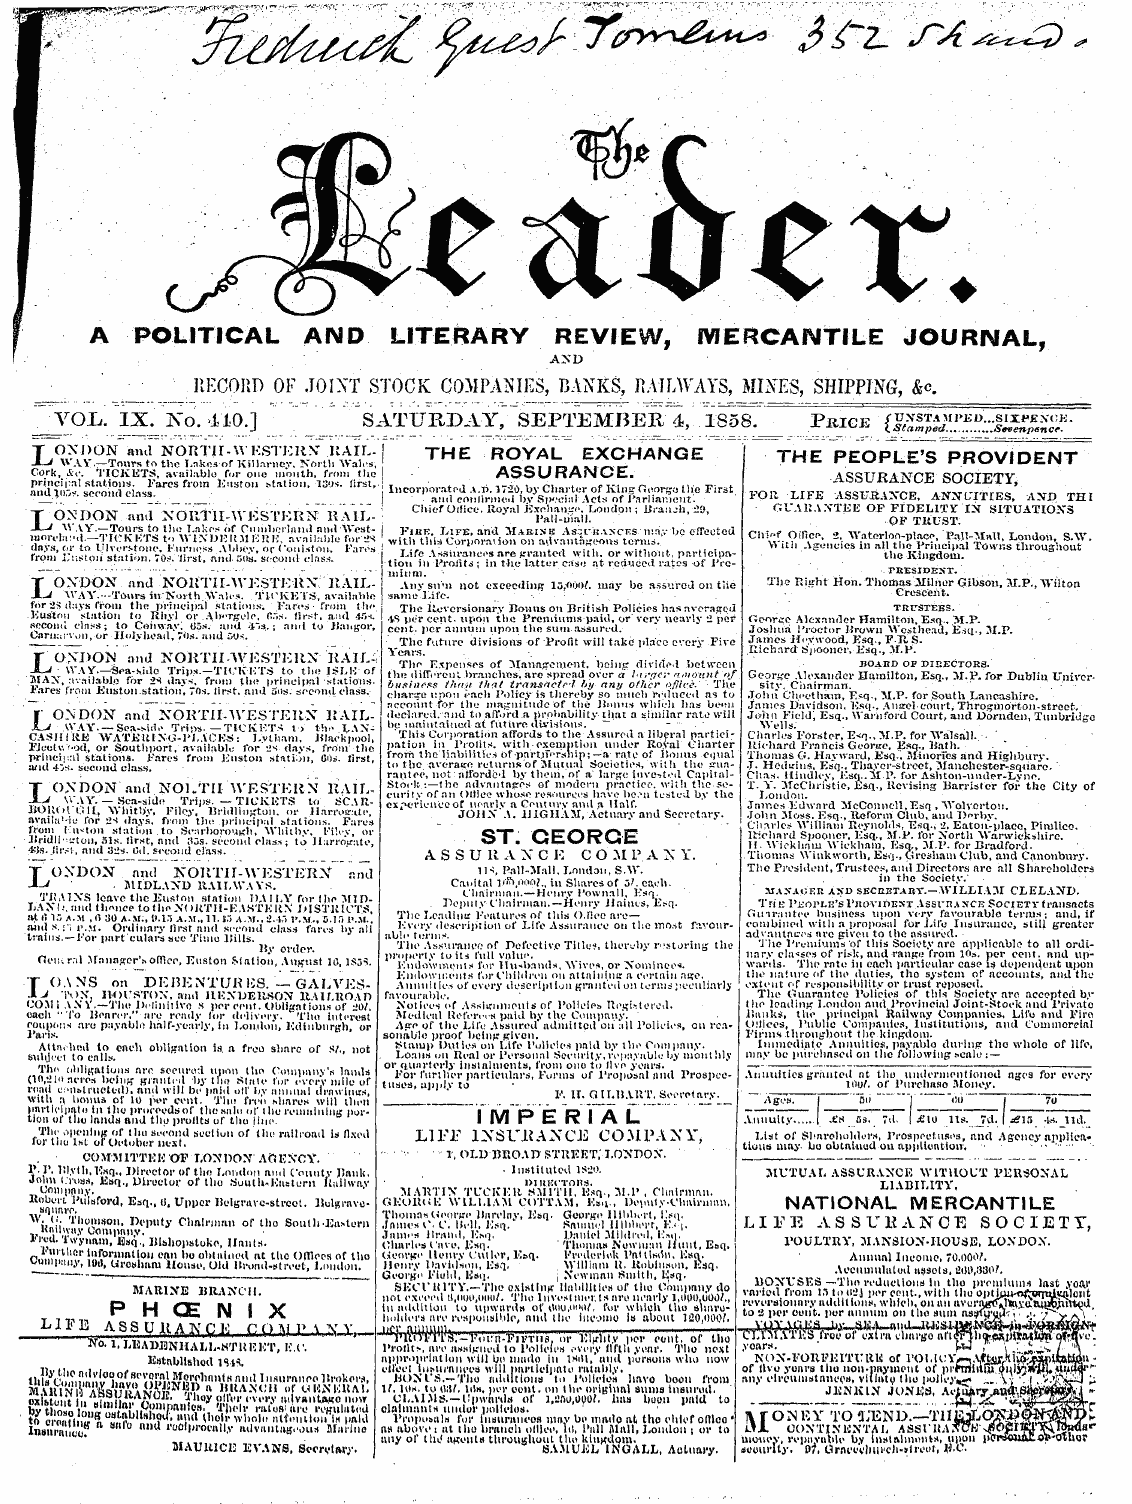 Leader (1850-1860): jS F Y, 2nd edition - ~^J Oll - ~ Tx. No. 410.] _ " " Satup^Da...